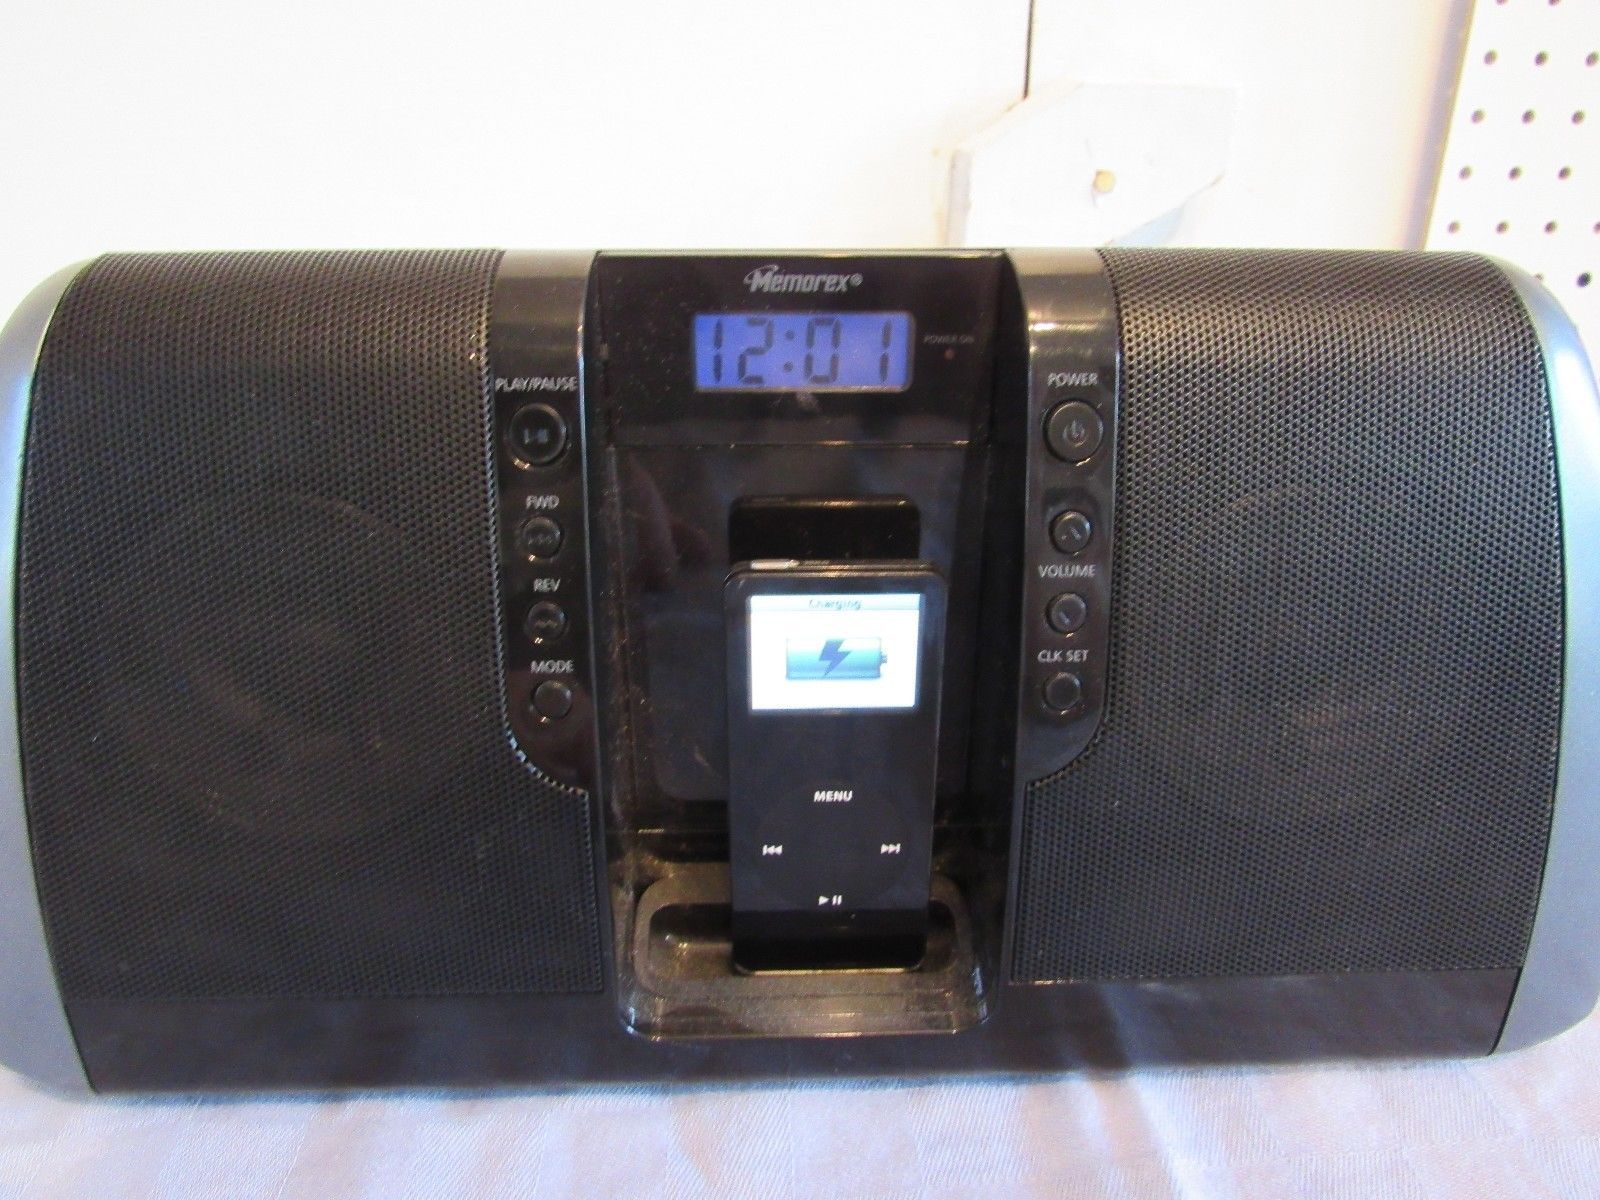 Apple iPod Black Mi3020 Docking Station Memorex - $19.81